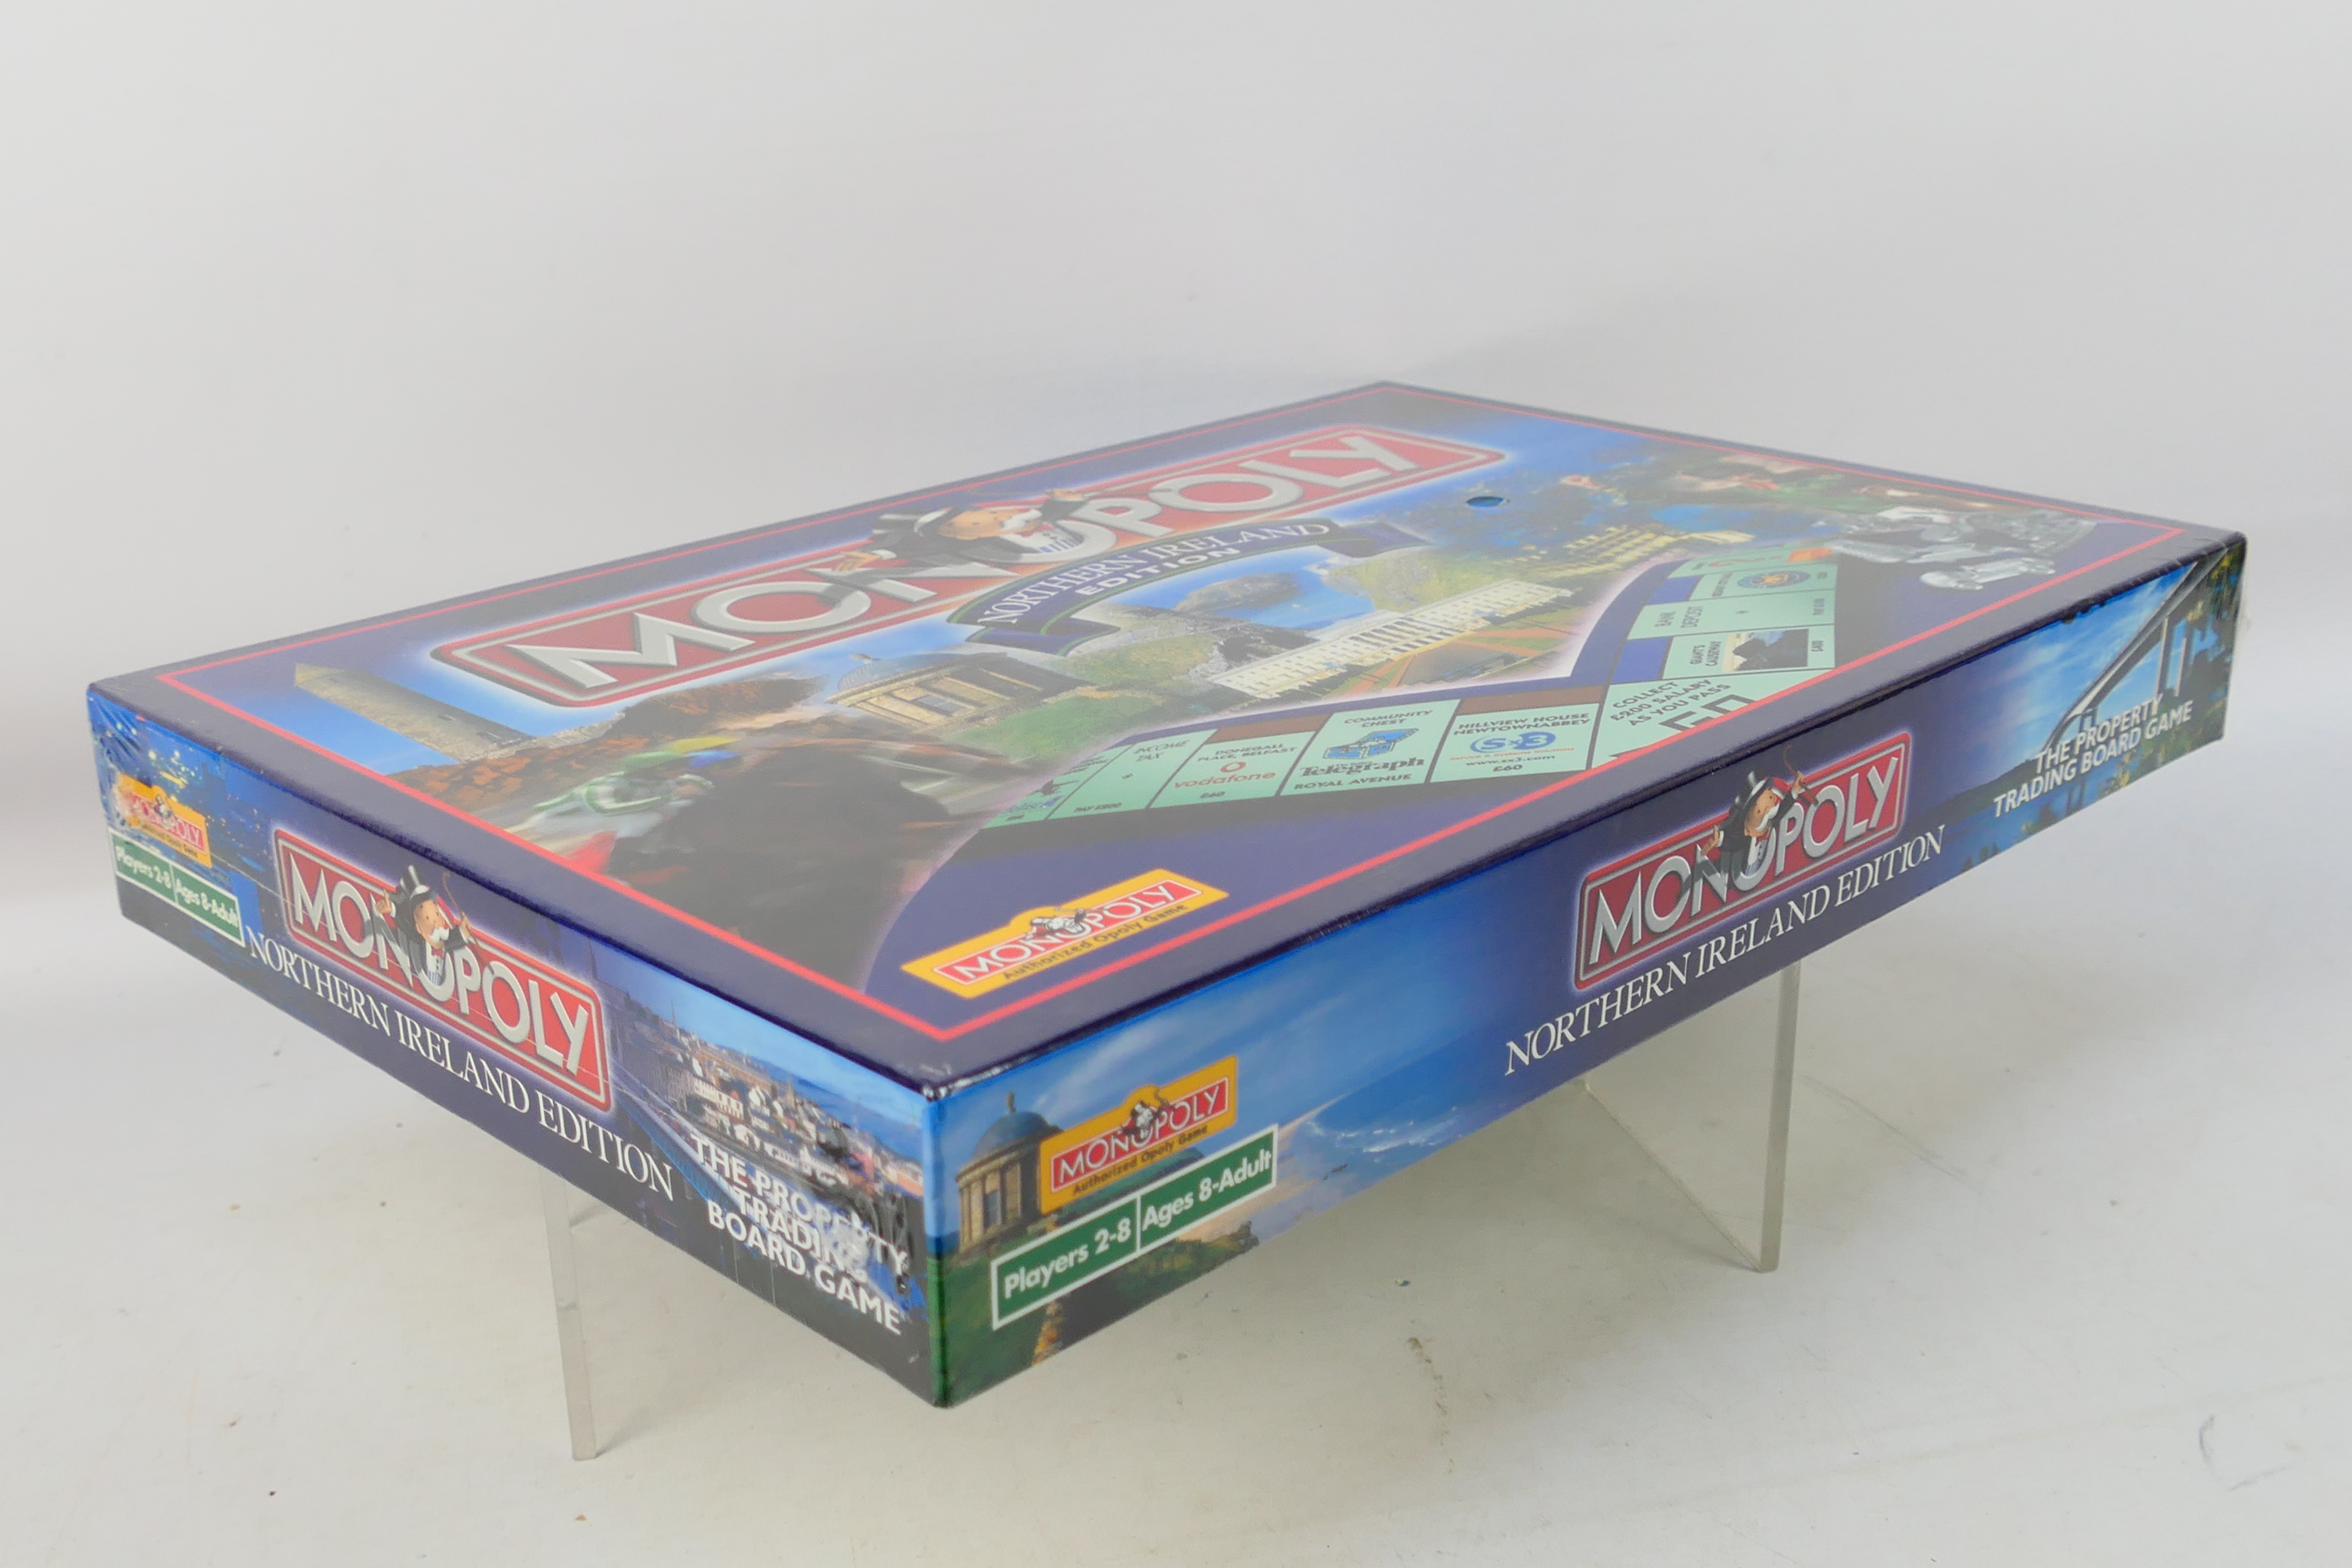 Hasbro - Monopoly - An unopened Northern - Image 3 of 3